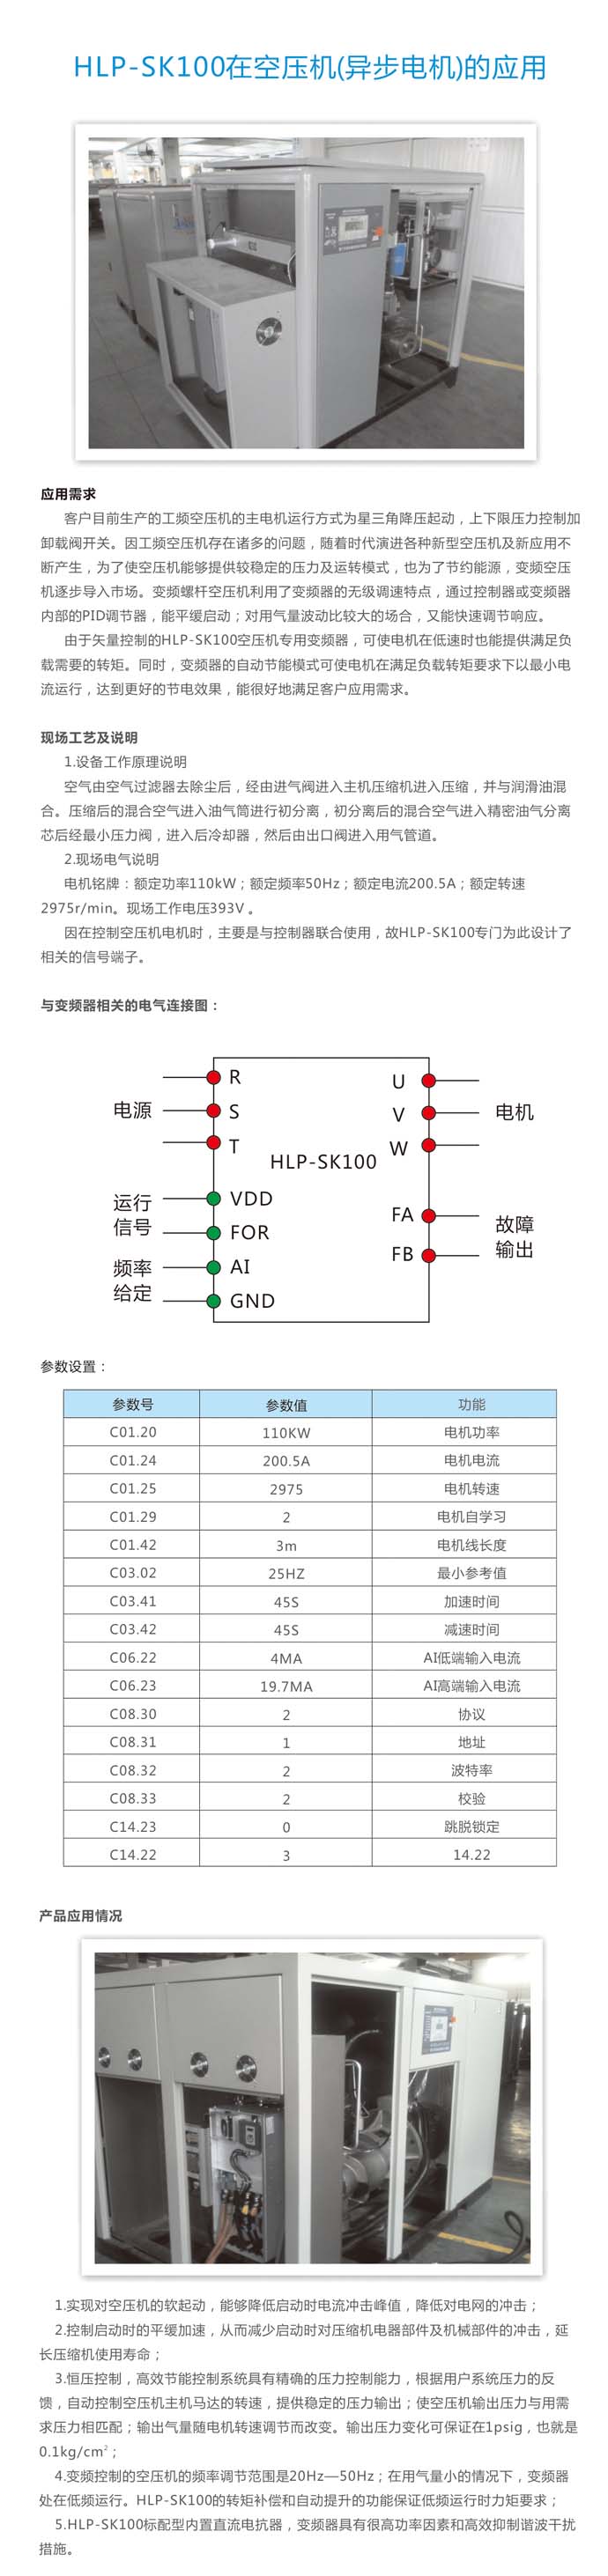 HLP-SK100在空压机（异步电机）的应用.jpg